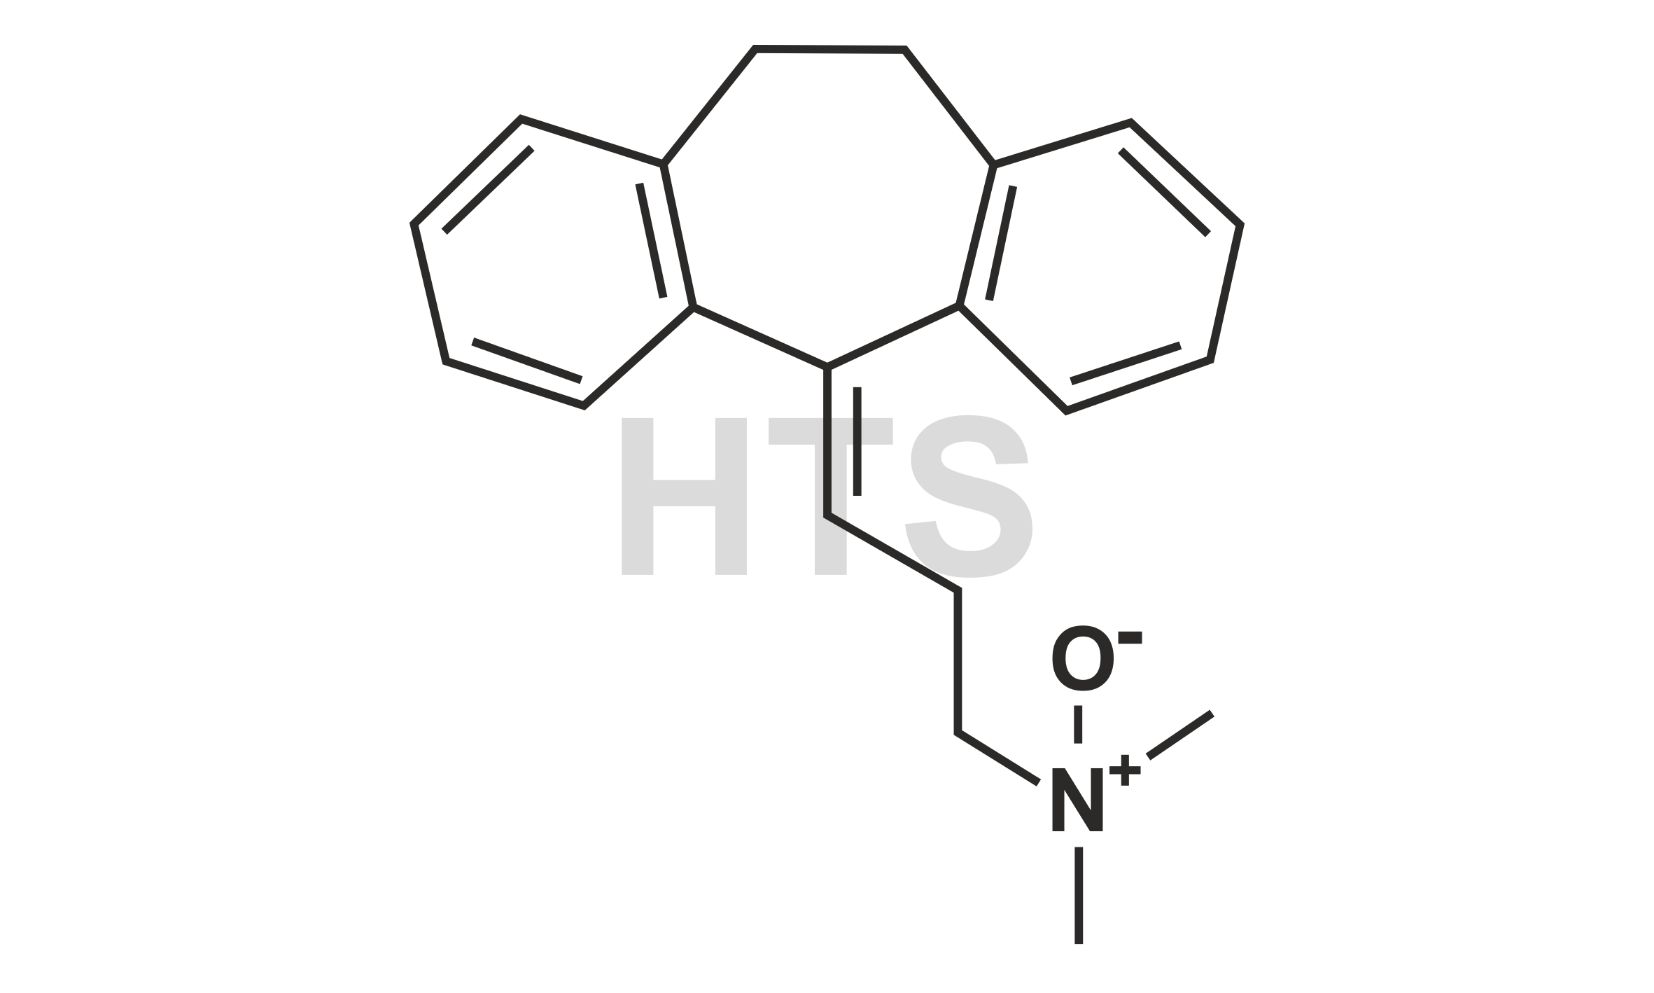 Amitriptyline N-Oxide